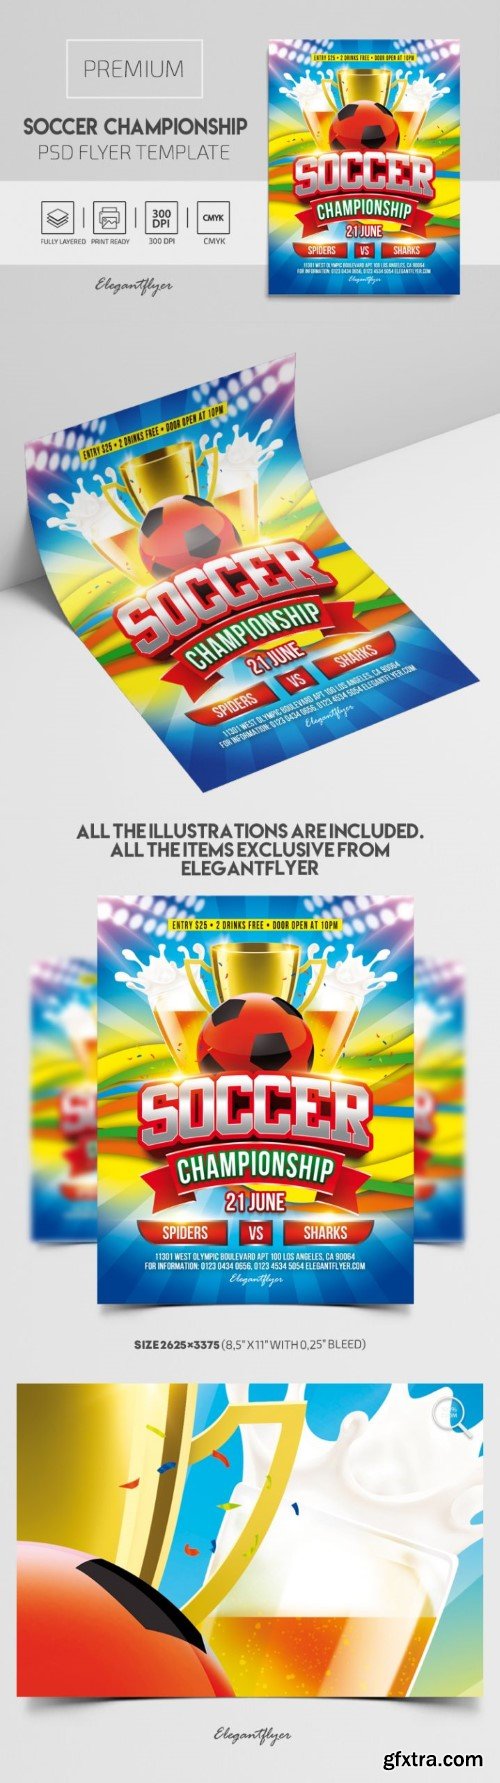 Soccer Championship – Premium PSD Flyer Template